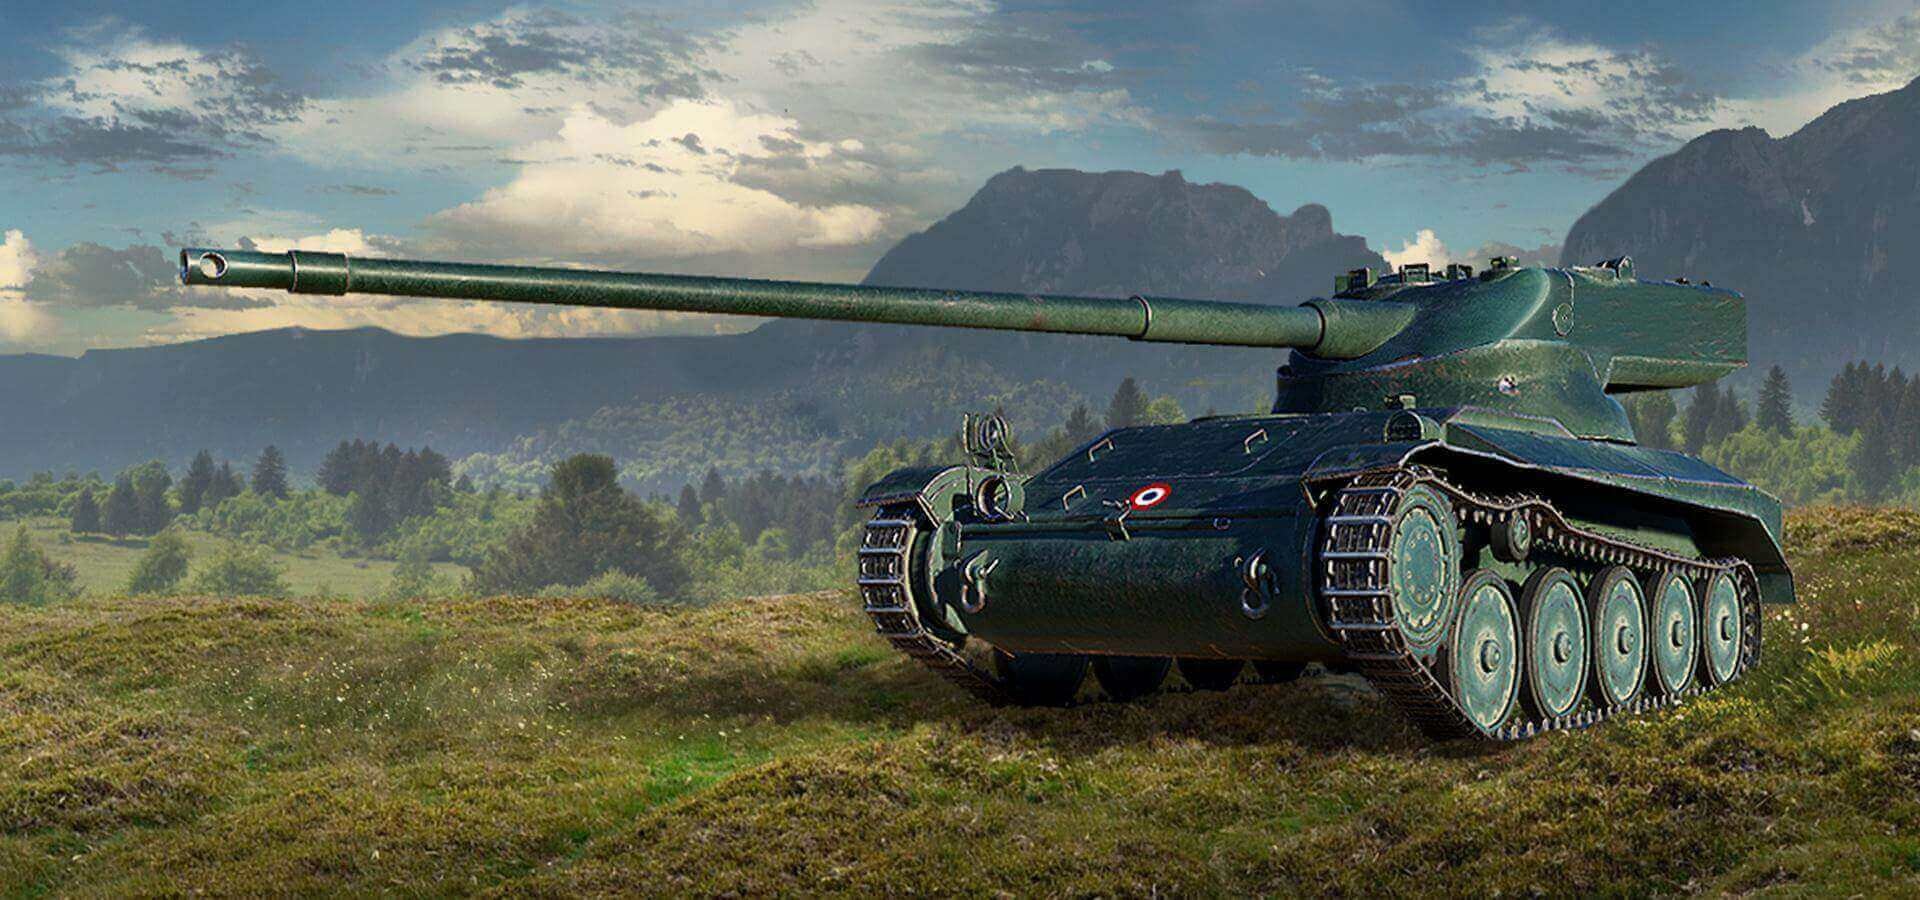 Wot 13. AMX 13 57. AMX 13 57 gf. АМХ 1357. World of Tanks AMX 13 57.